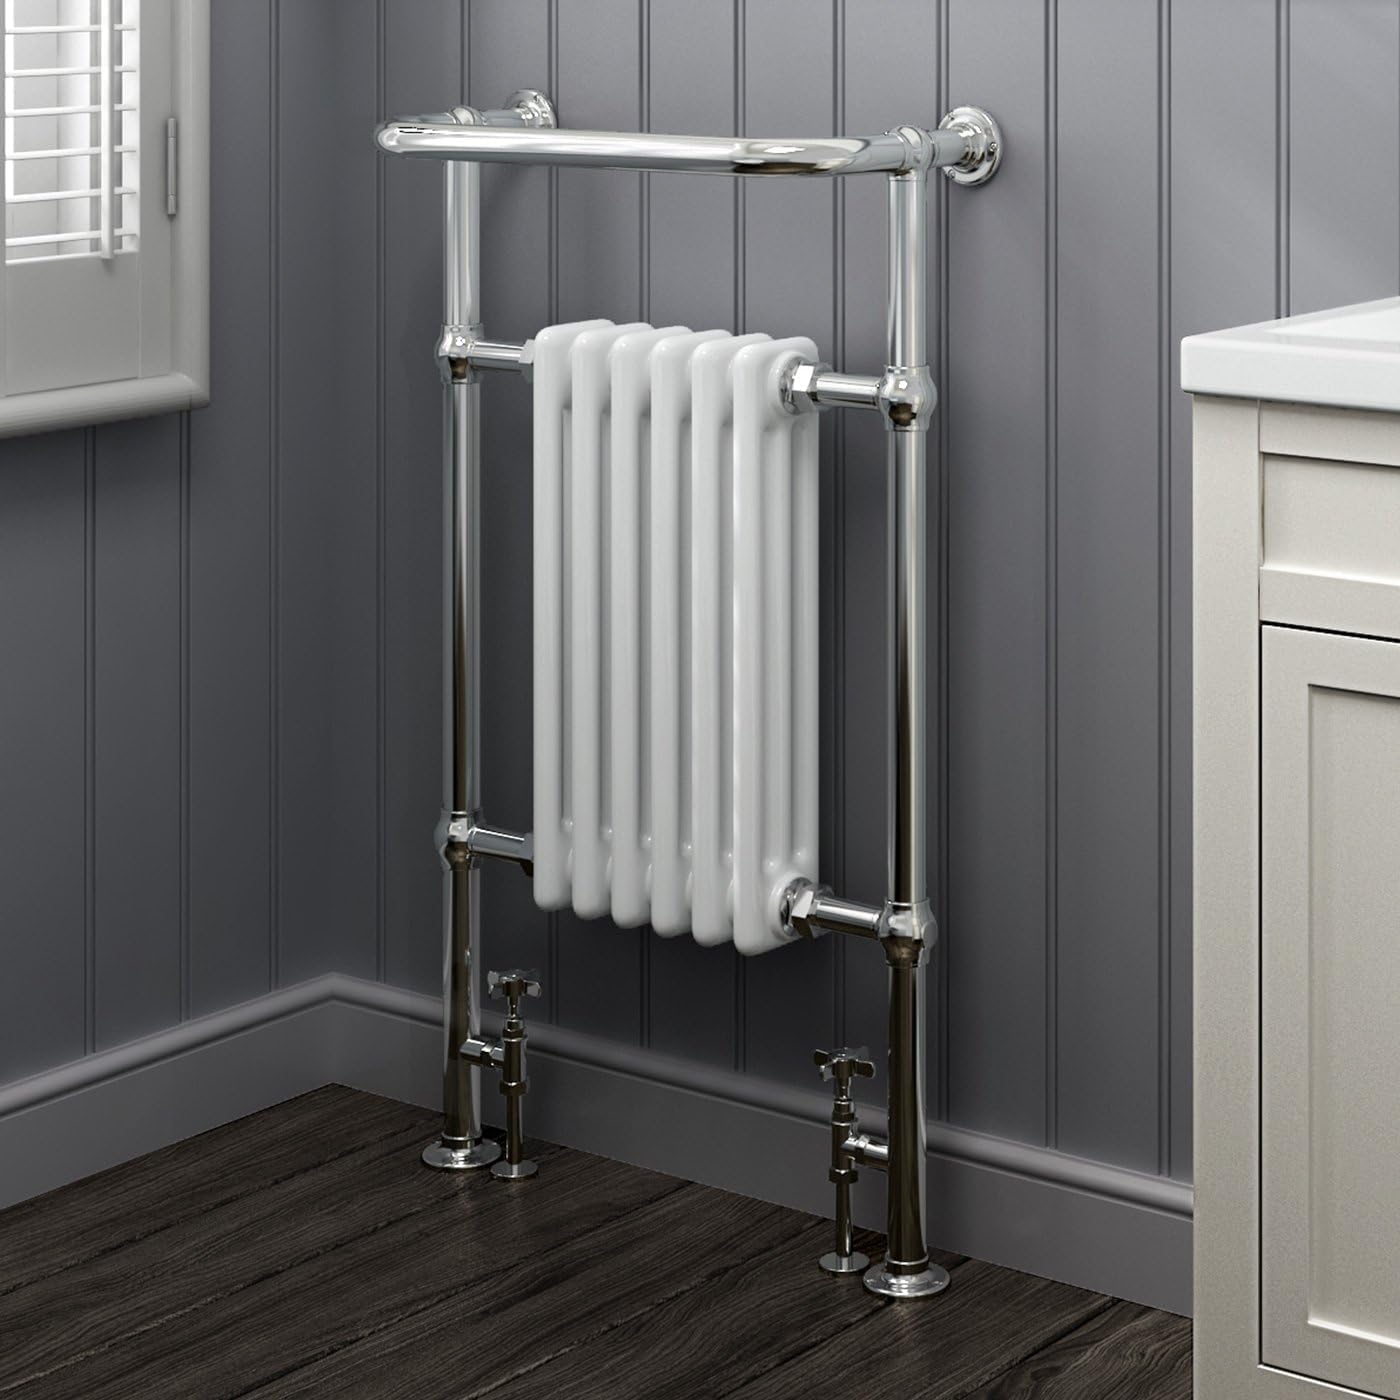 Bathroom4less Heating,Heated Towel Rails,Column Radiators 568mm x 952mm Traditional Vertical Heated Towel Radiator - 4 Column - Chrome&White